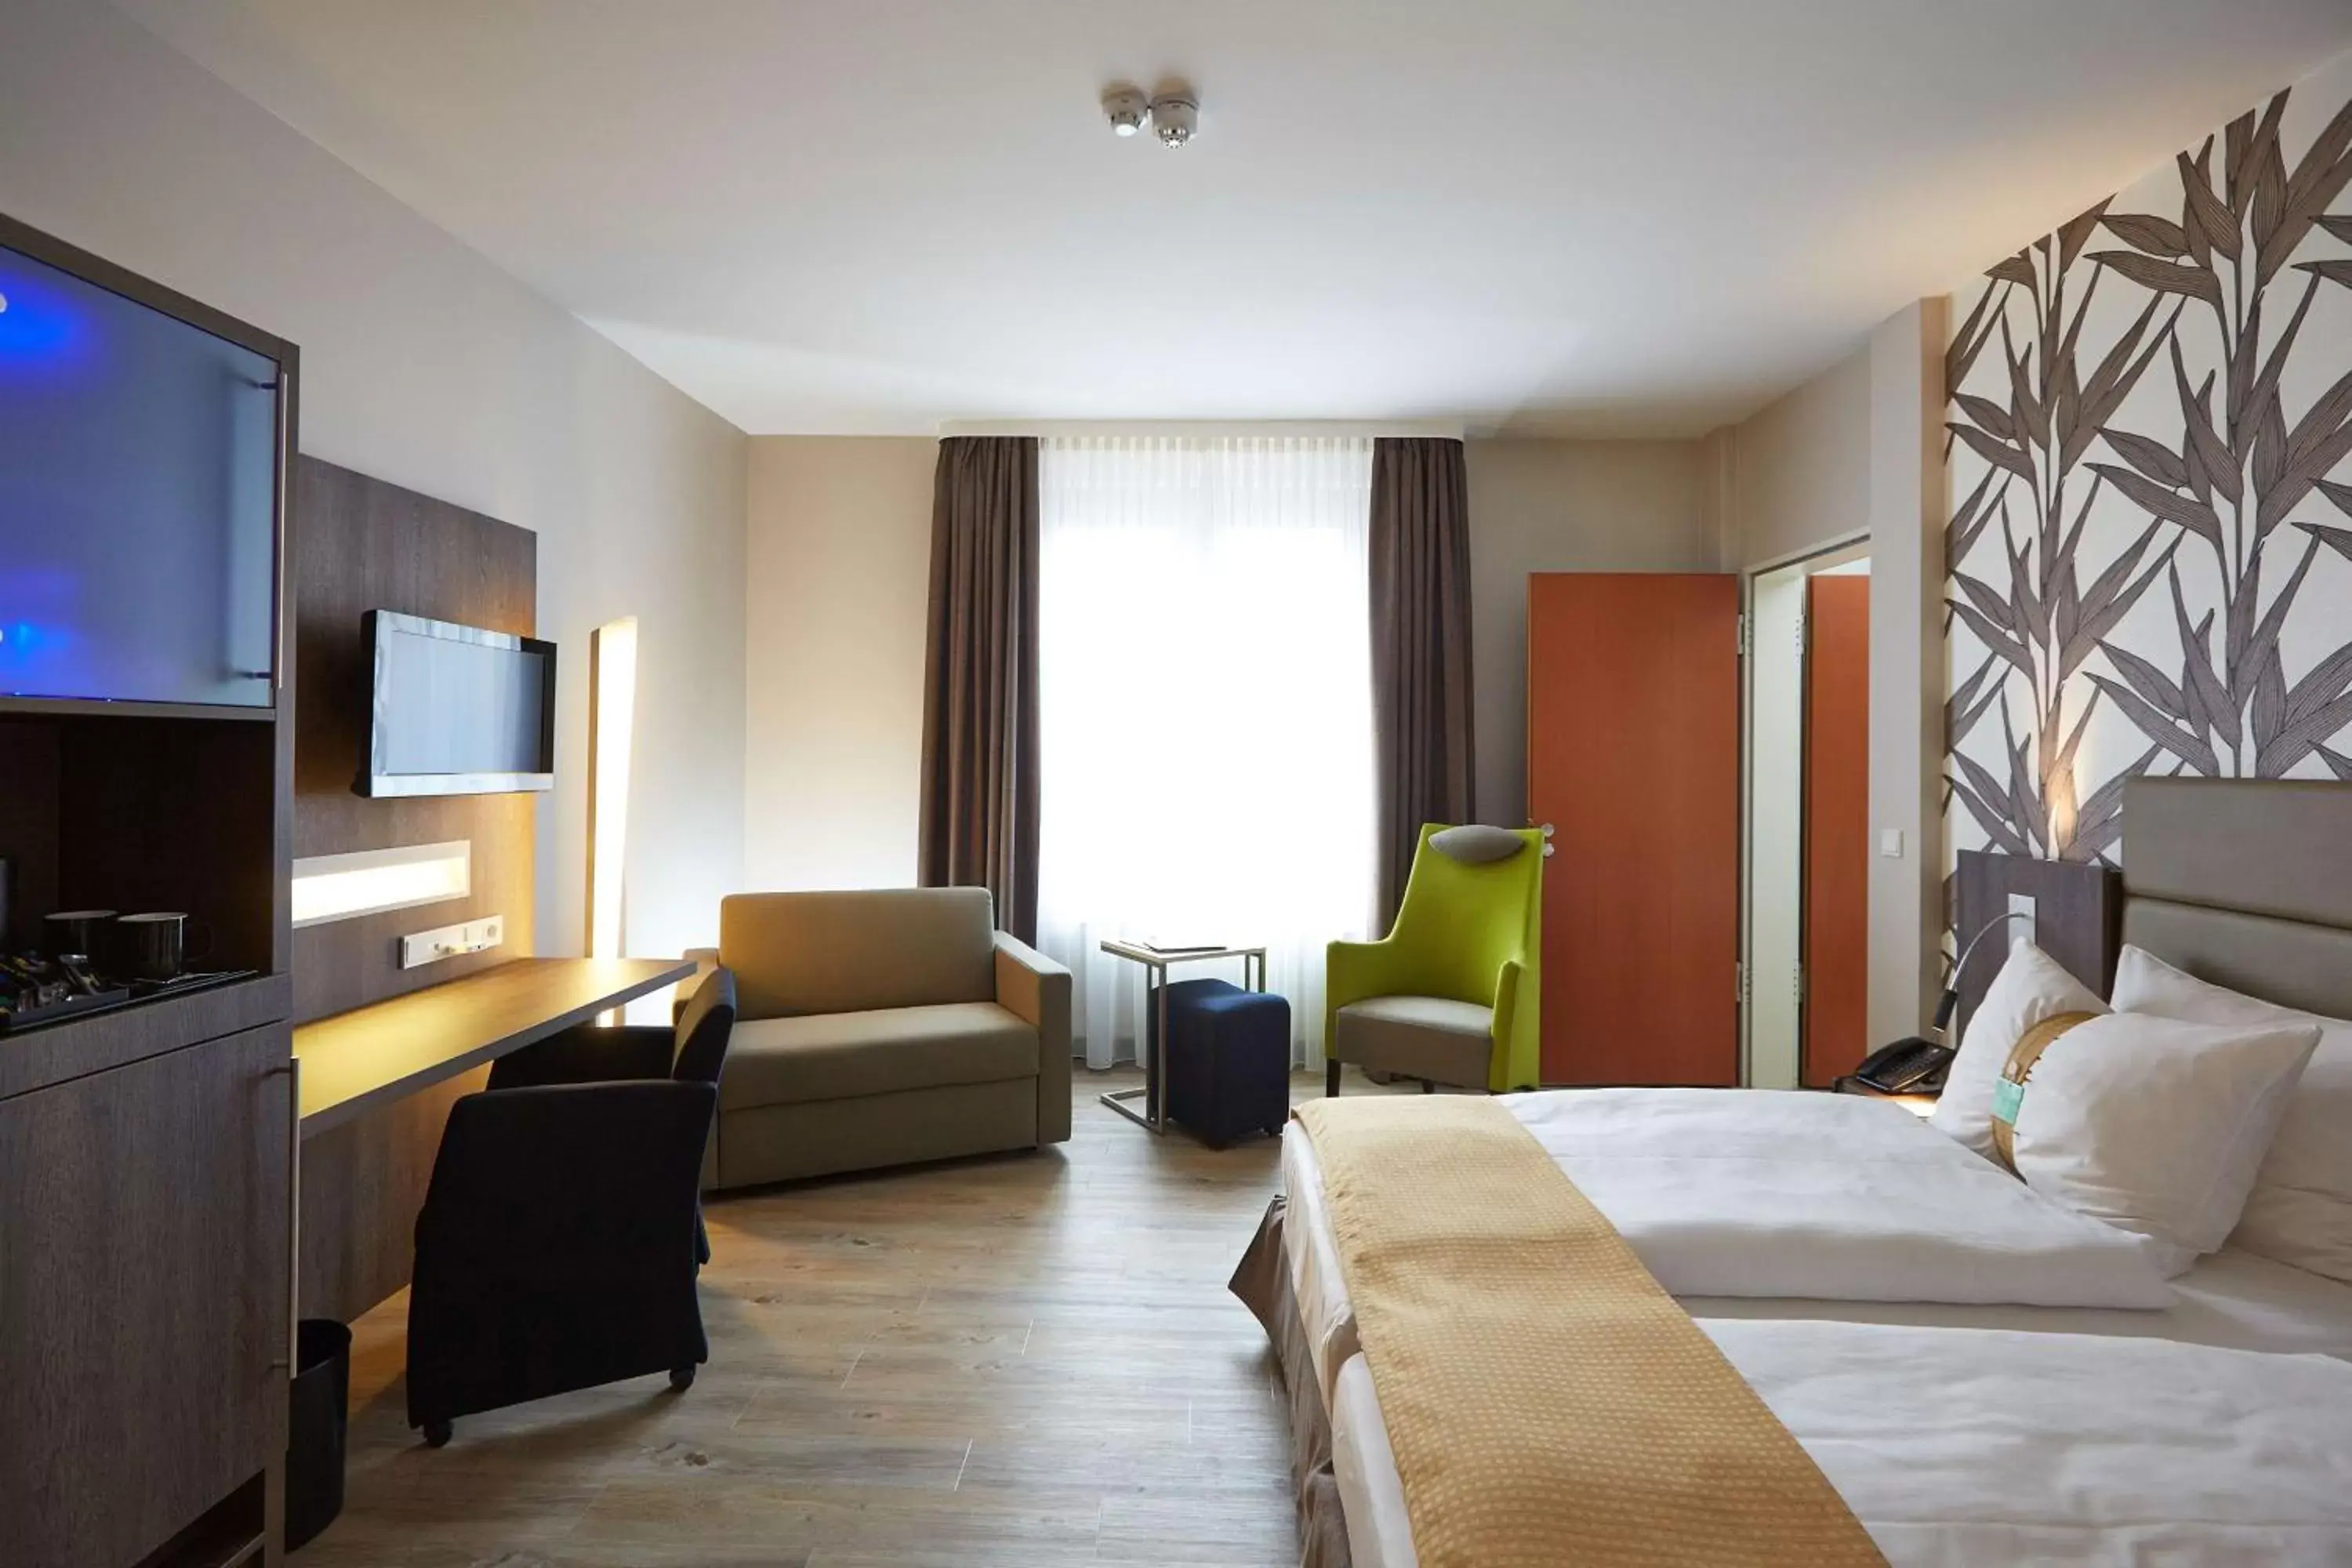 Bedroom, TV/Entertainment Center in First Inn Hotel Zwickau